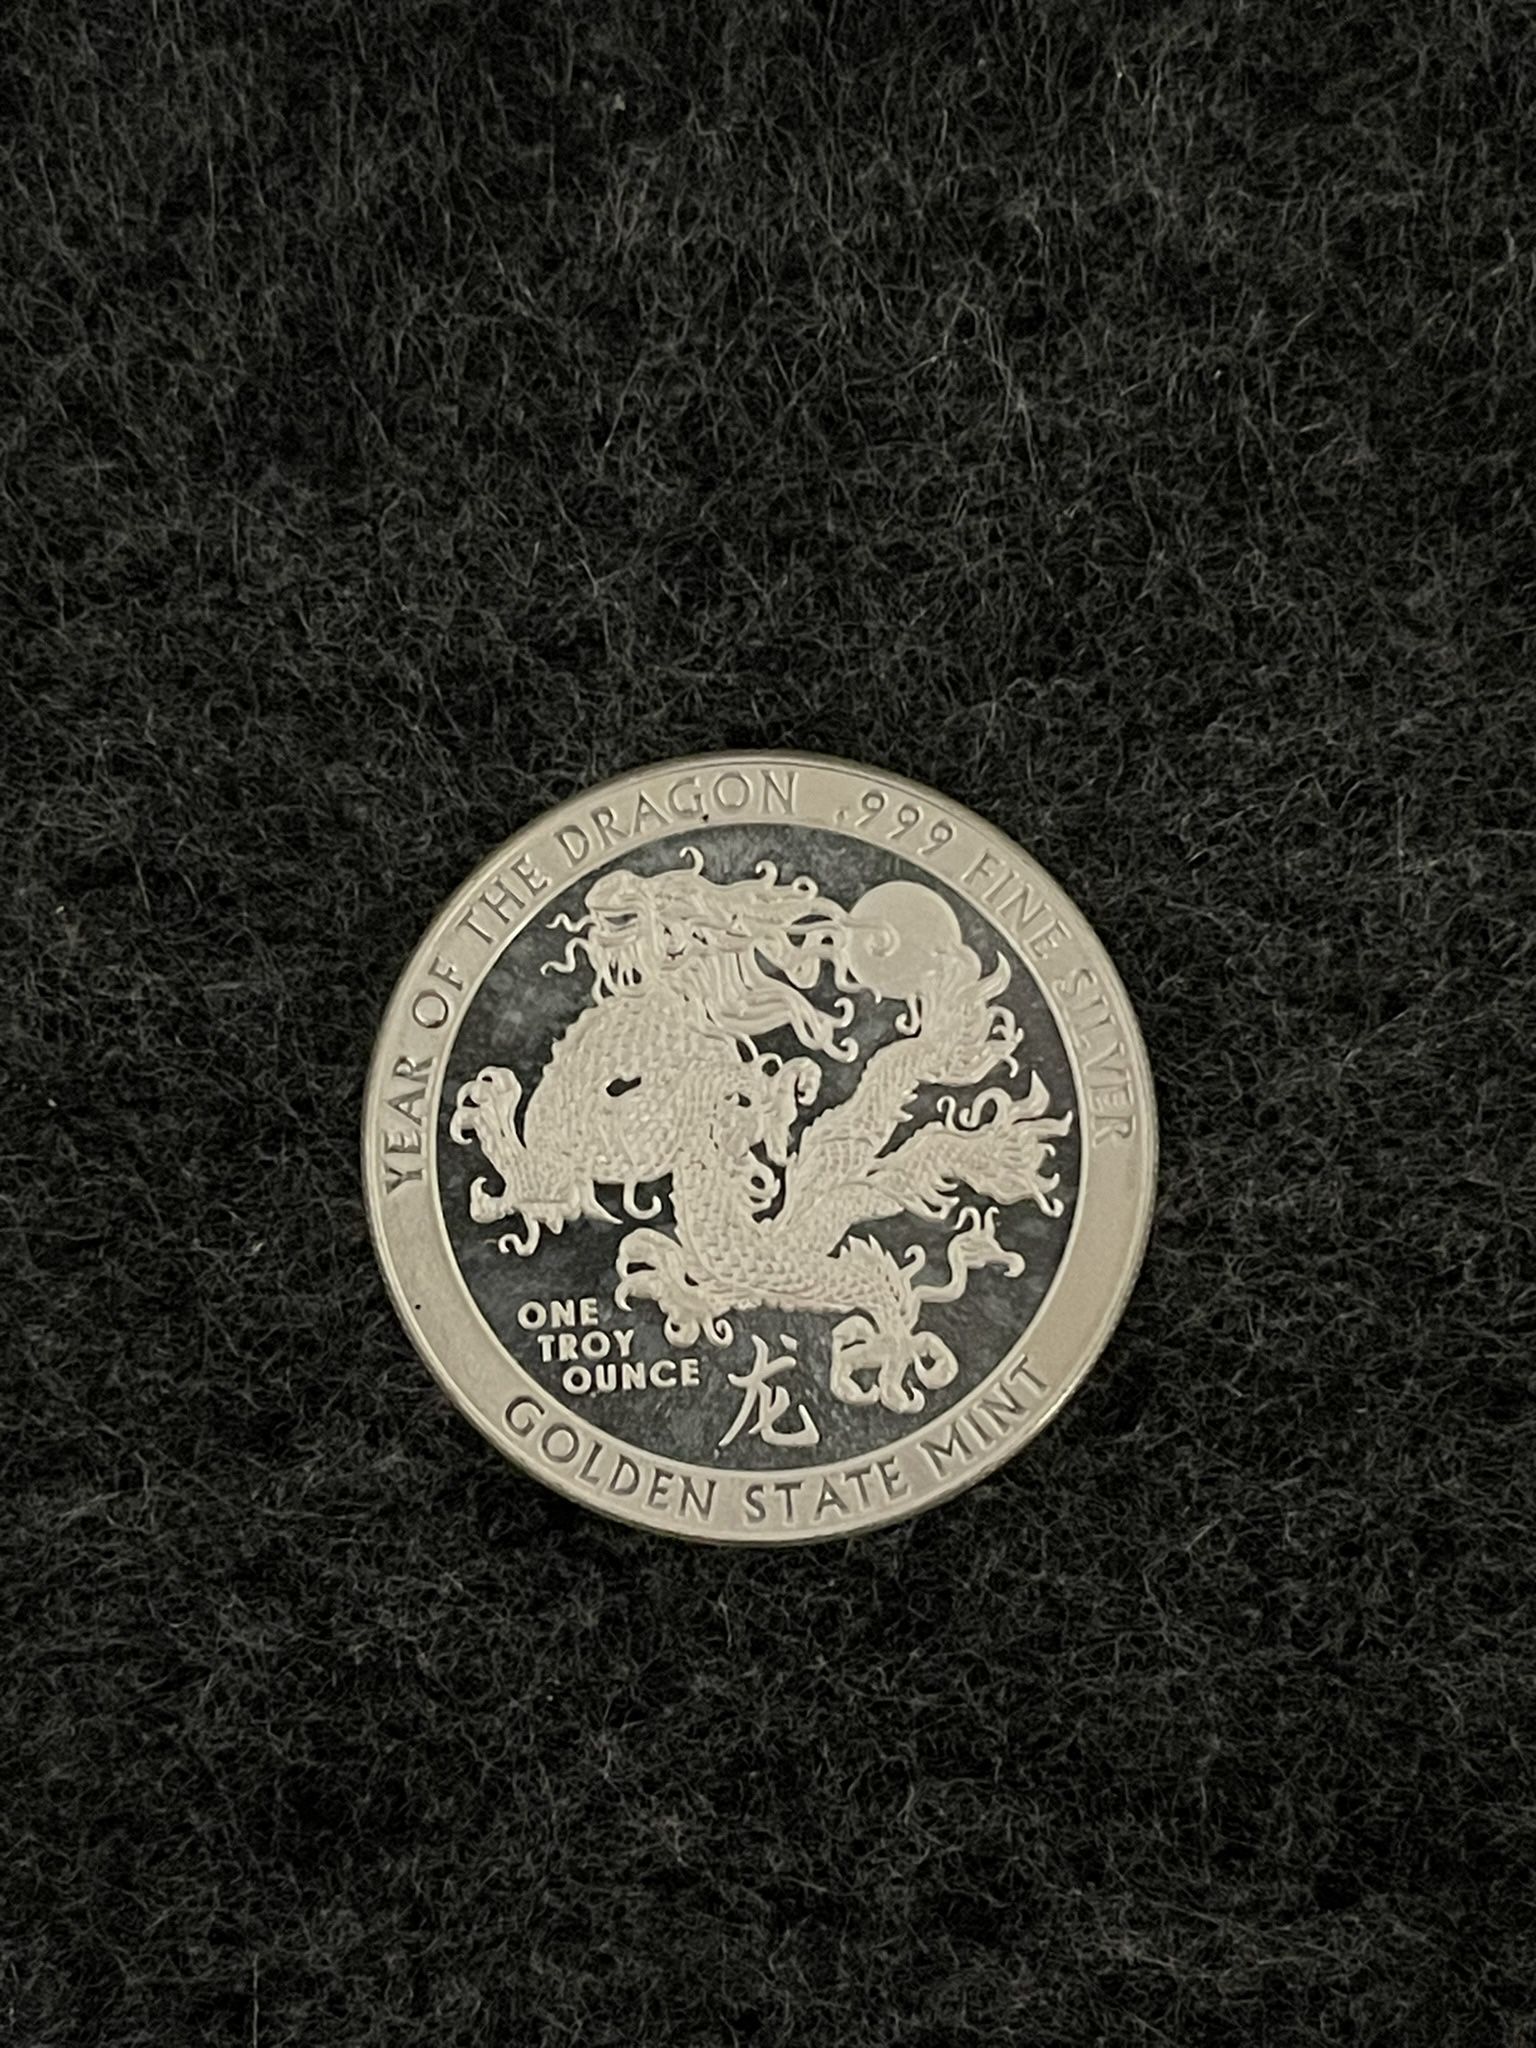 1 oz. Year of the Dragon Chinese Lunar Calendar round .999 fine silver